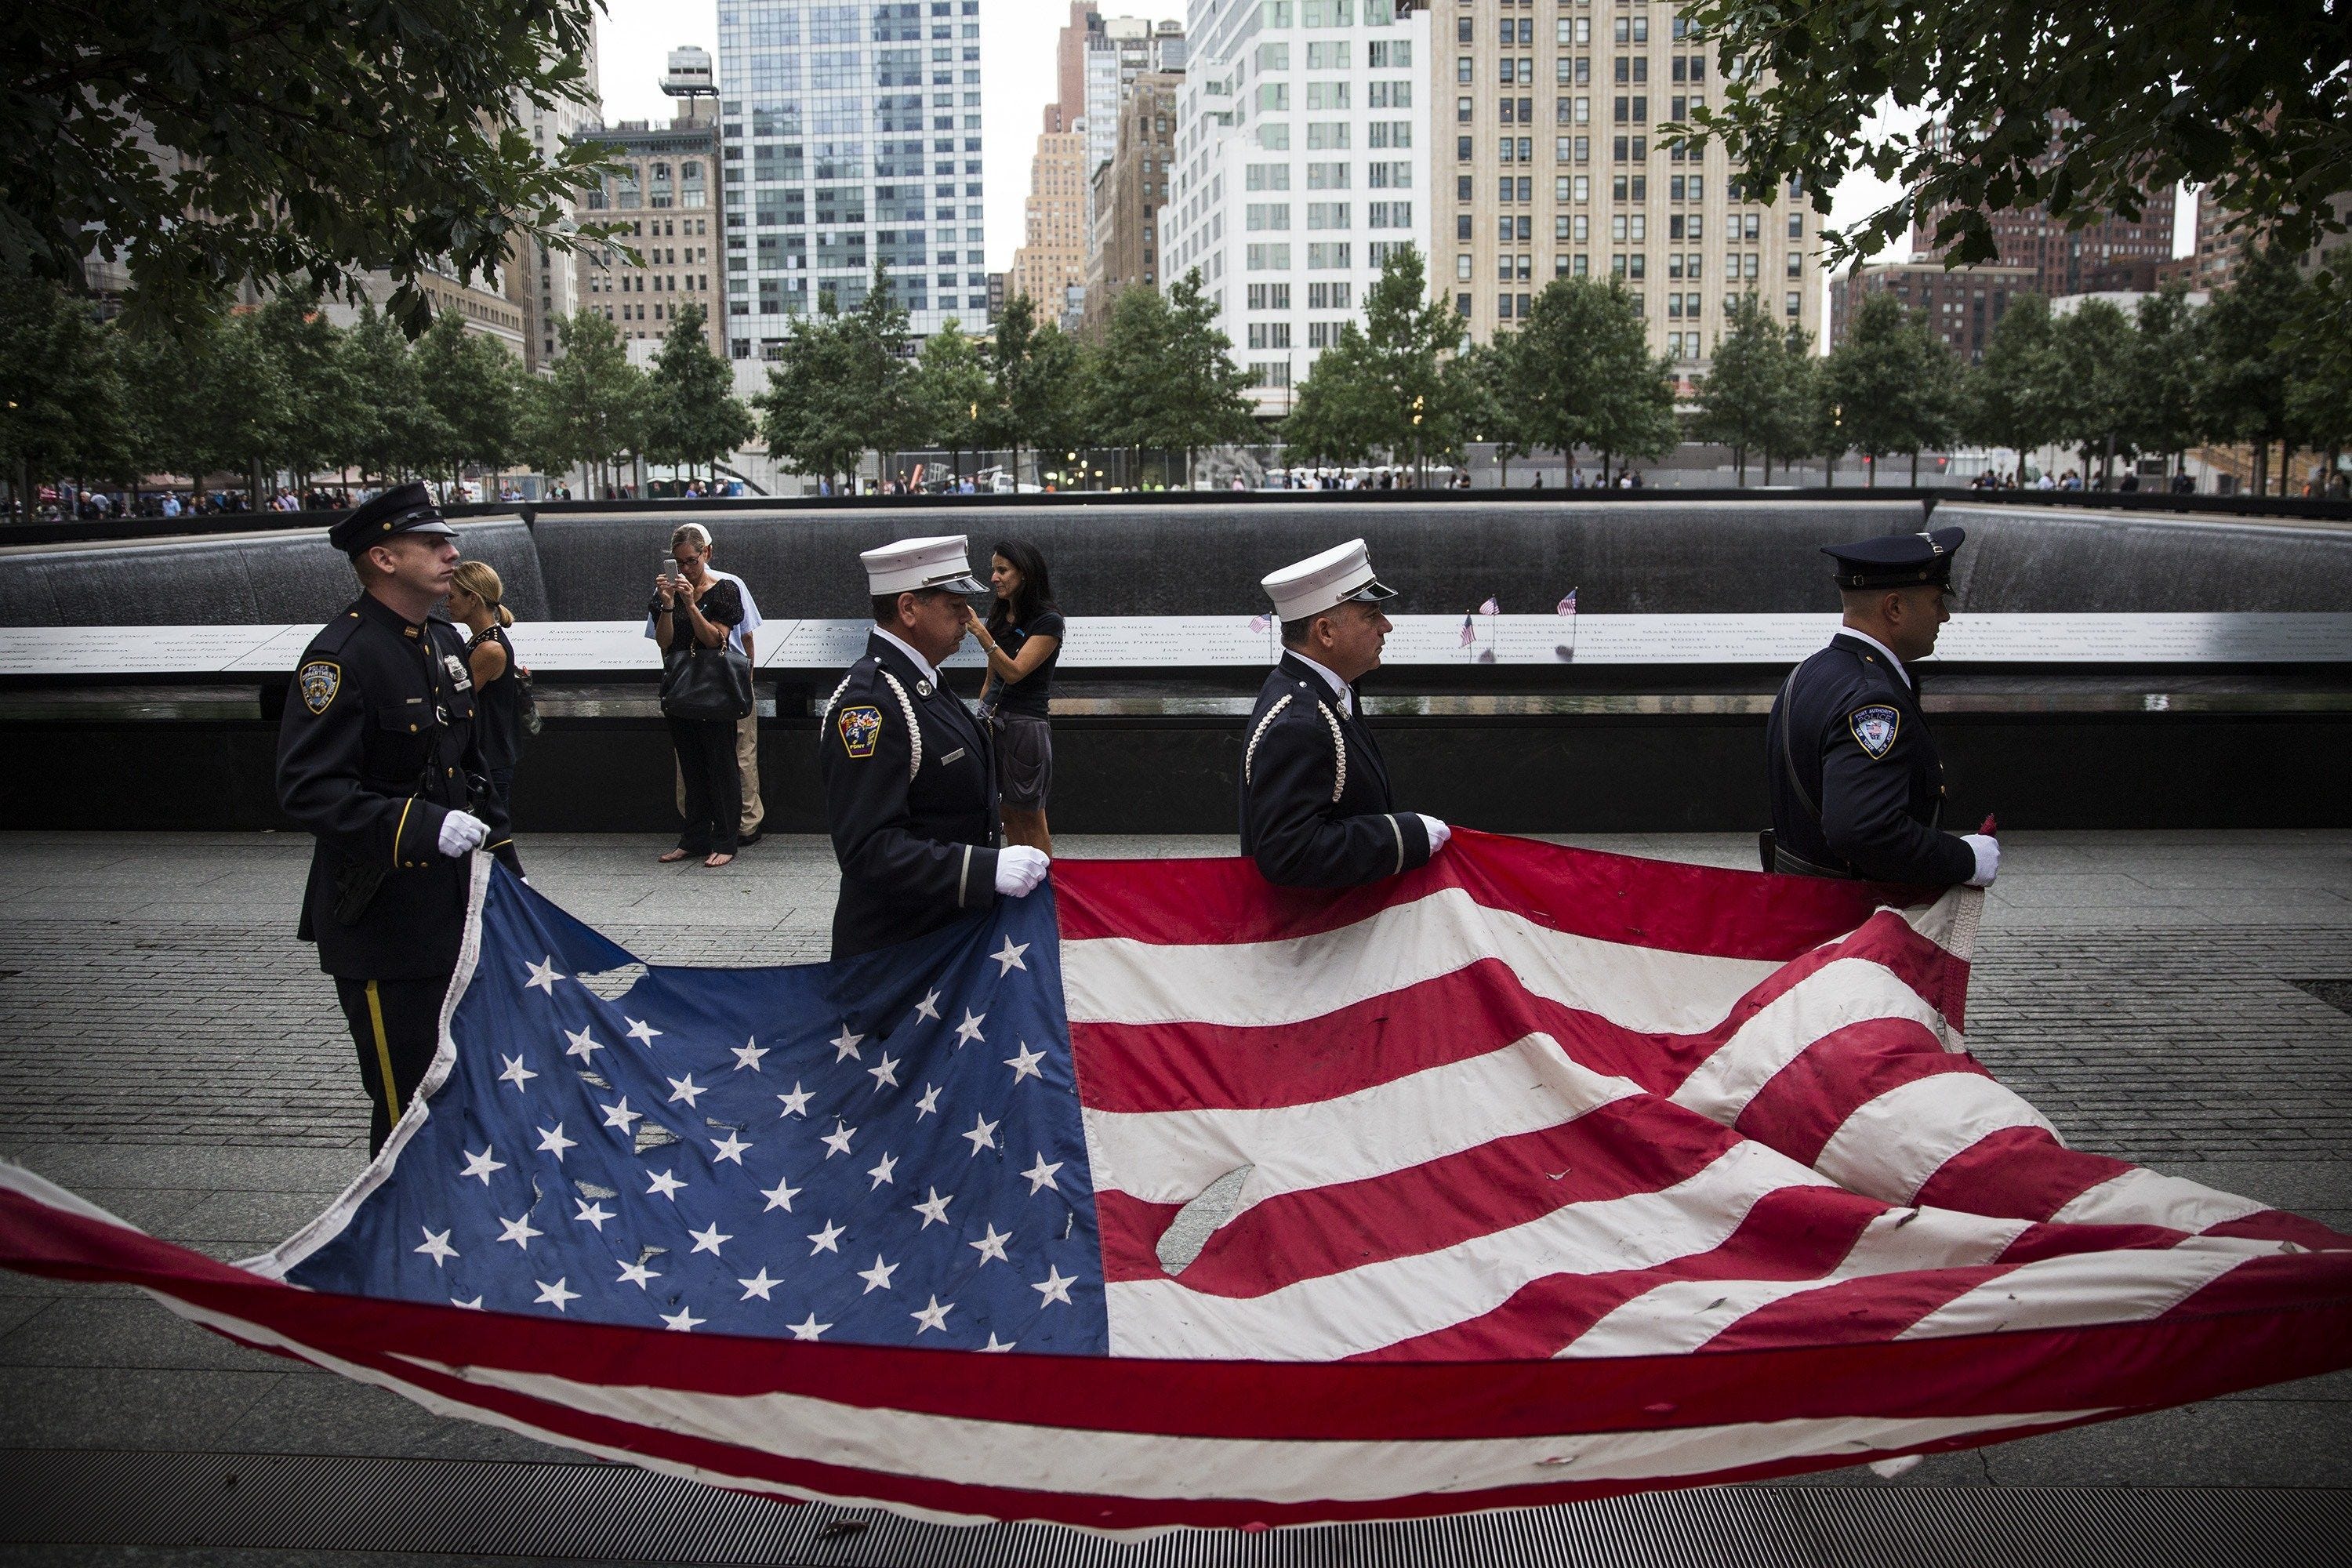 The forgotten casualties of 9/11